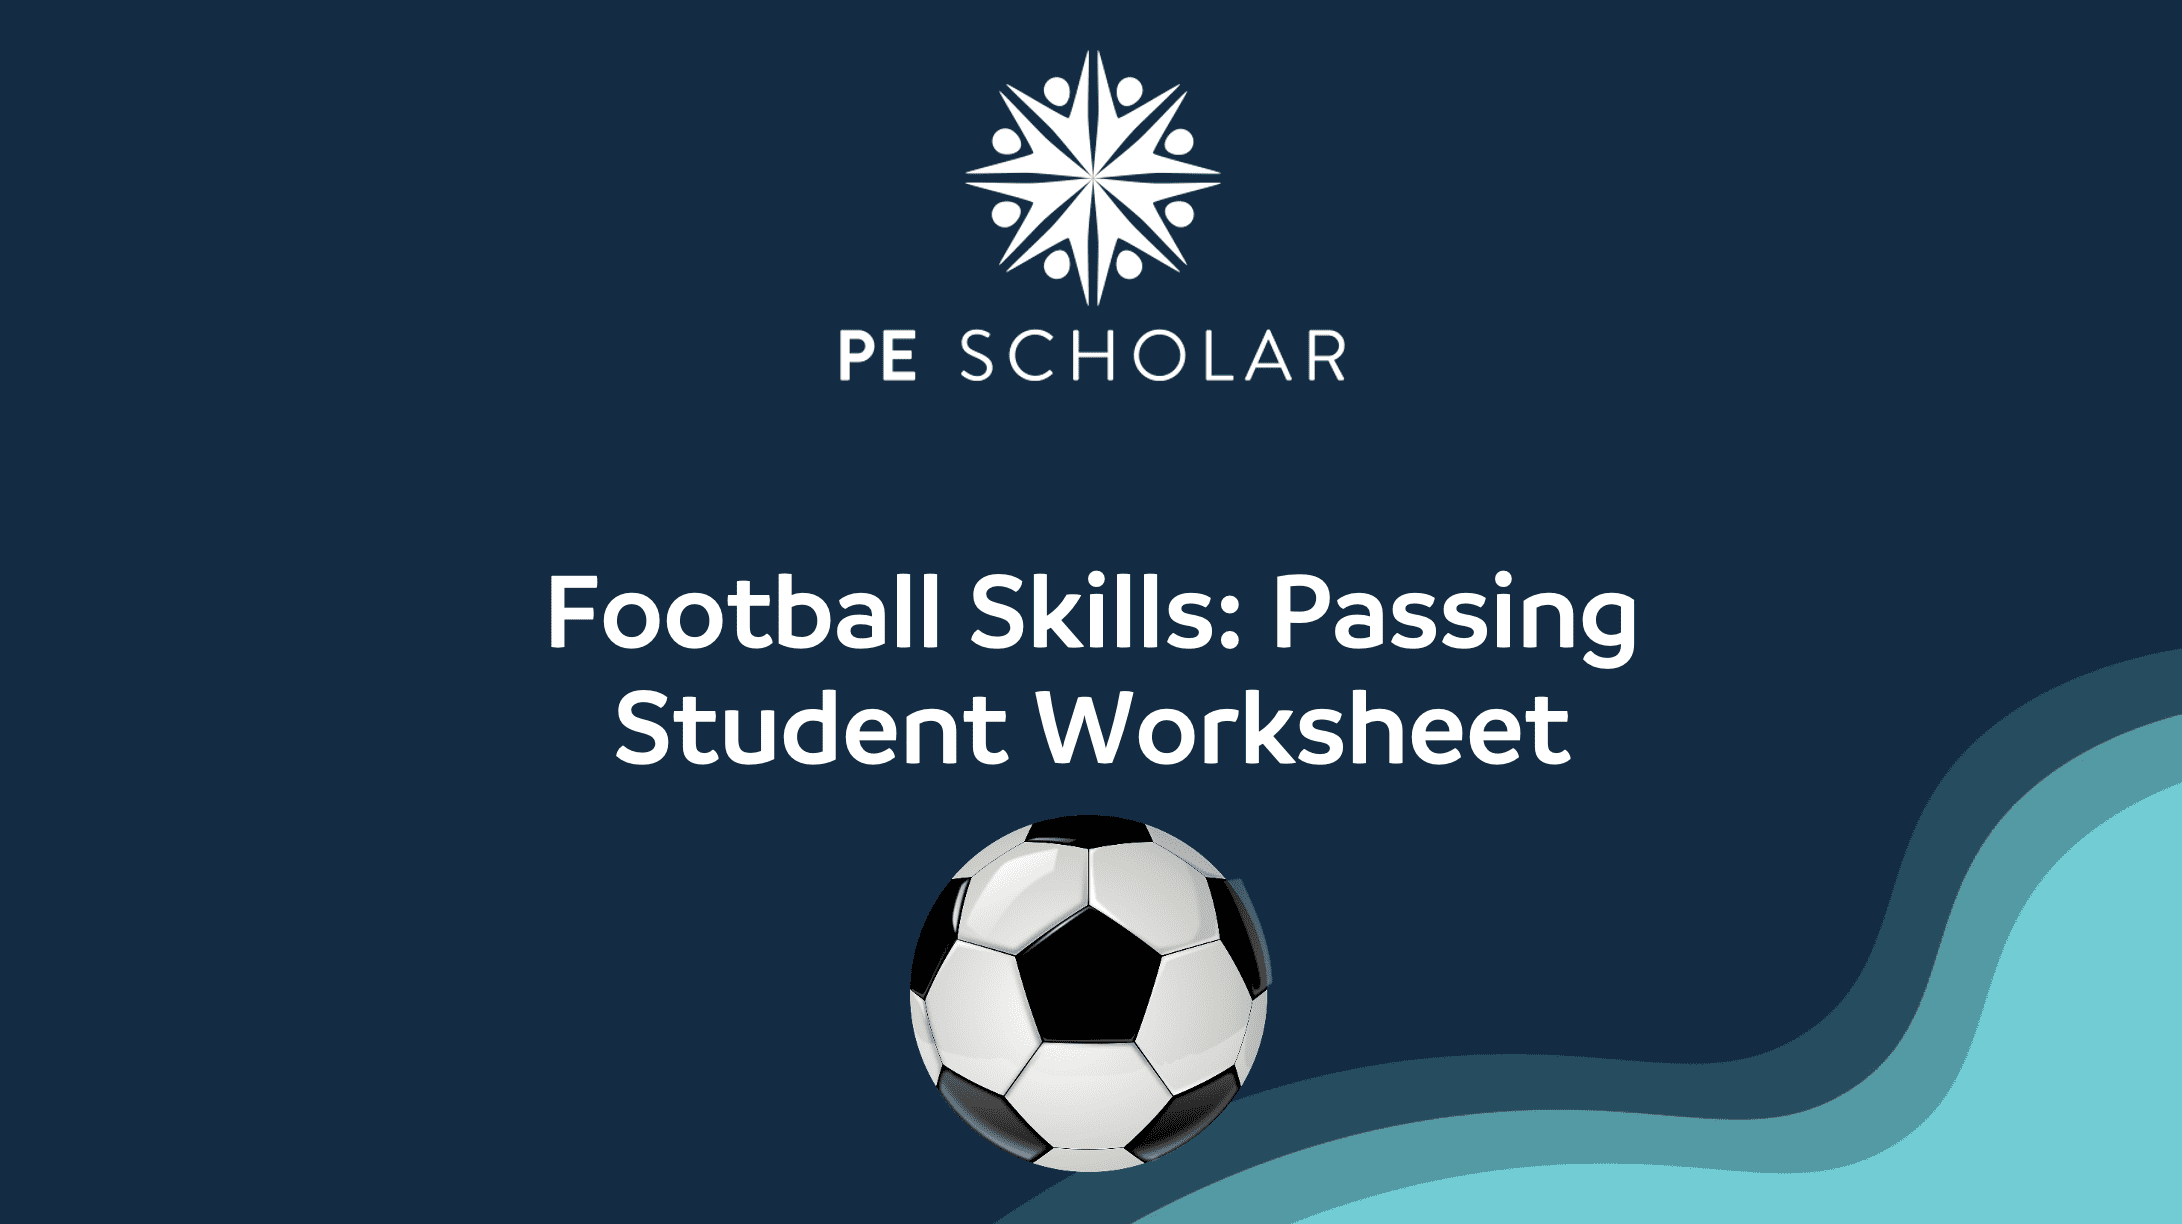 Football Skills: Passing Student Worksheet